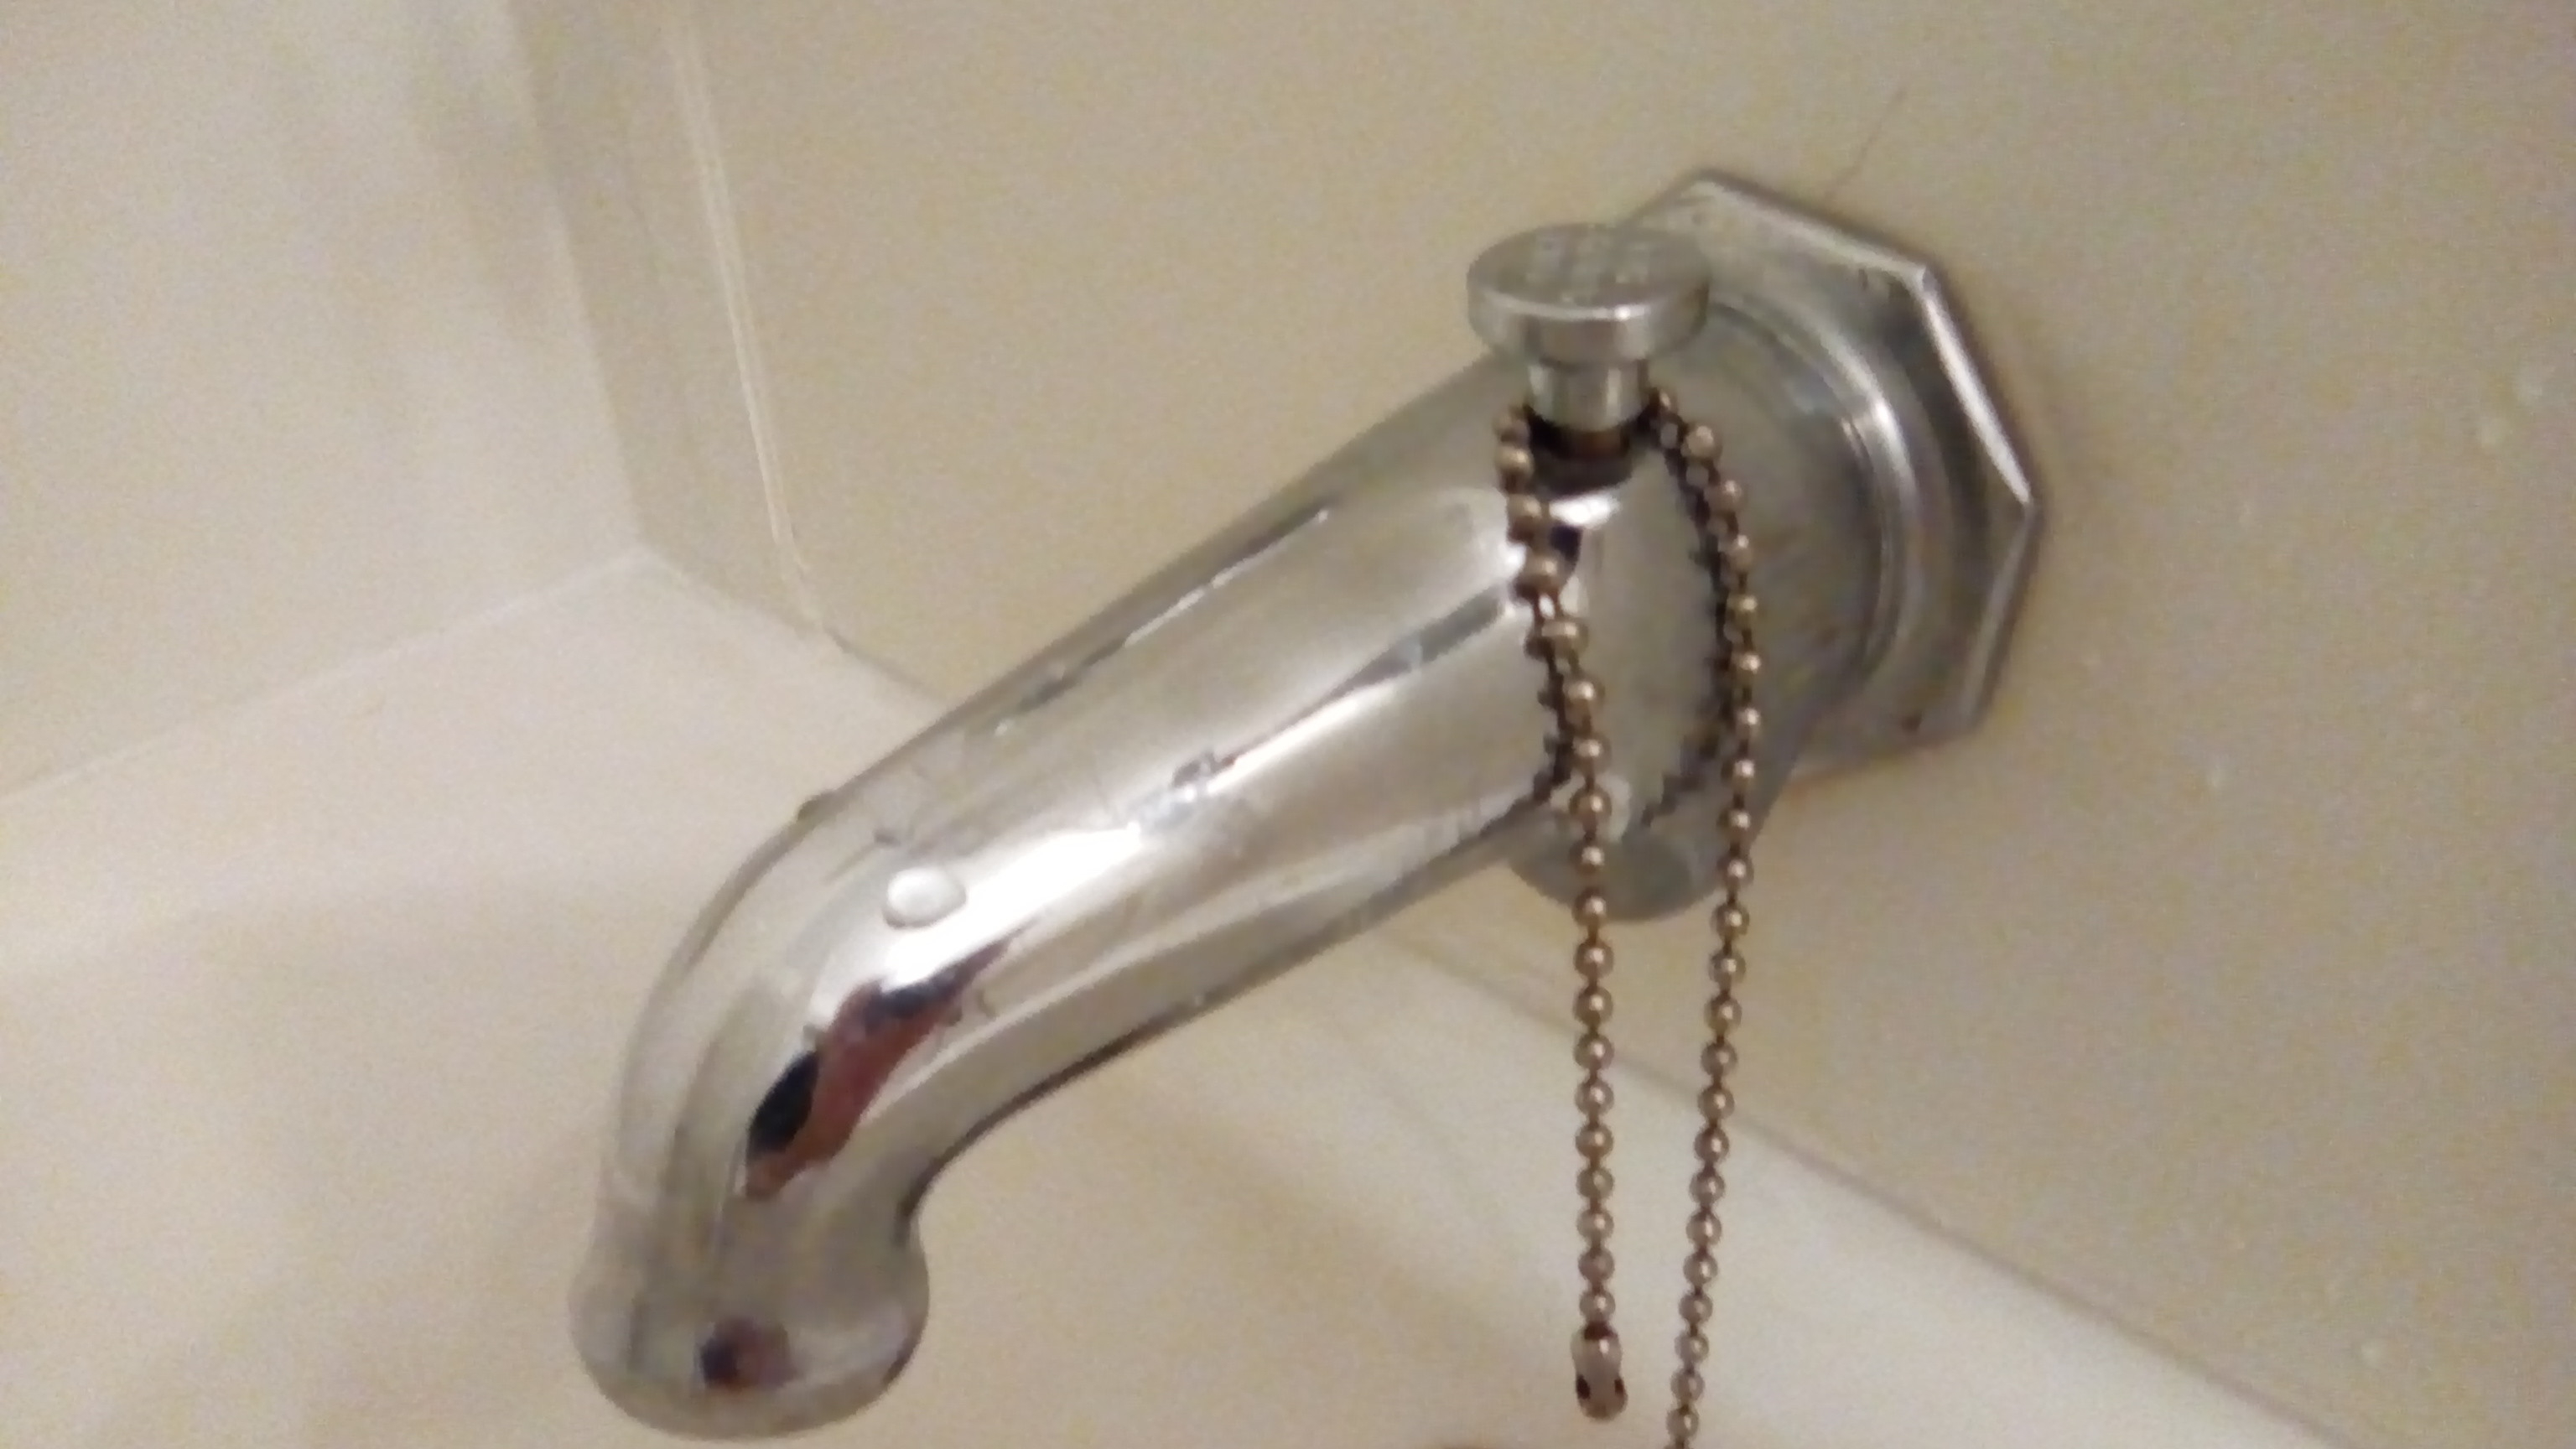 40 Most Brilliant Old Bathtub Faucet Cartridge Removal Bathroom regarding proportions 3072 X 1728